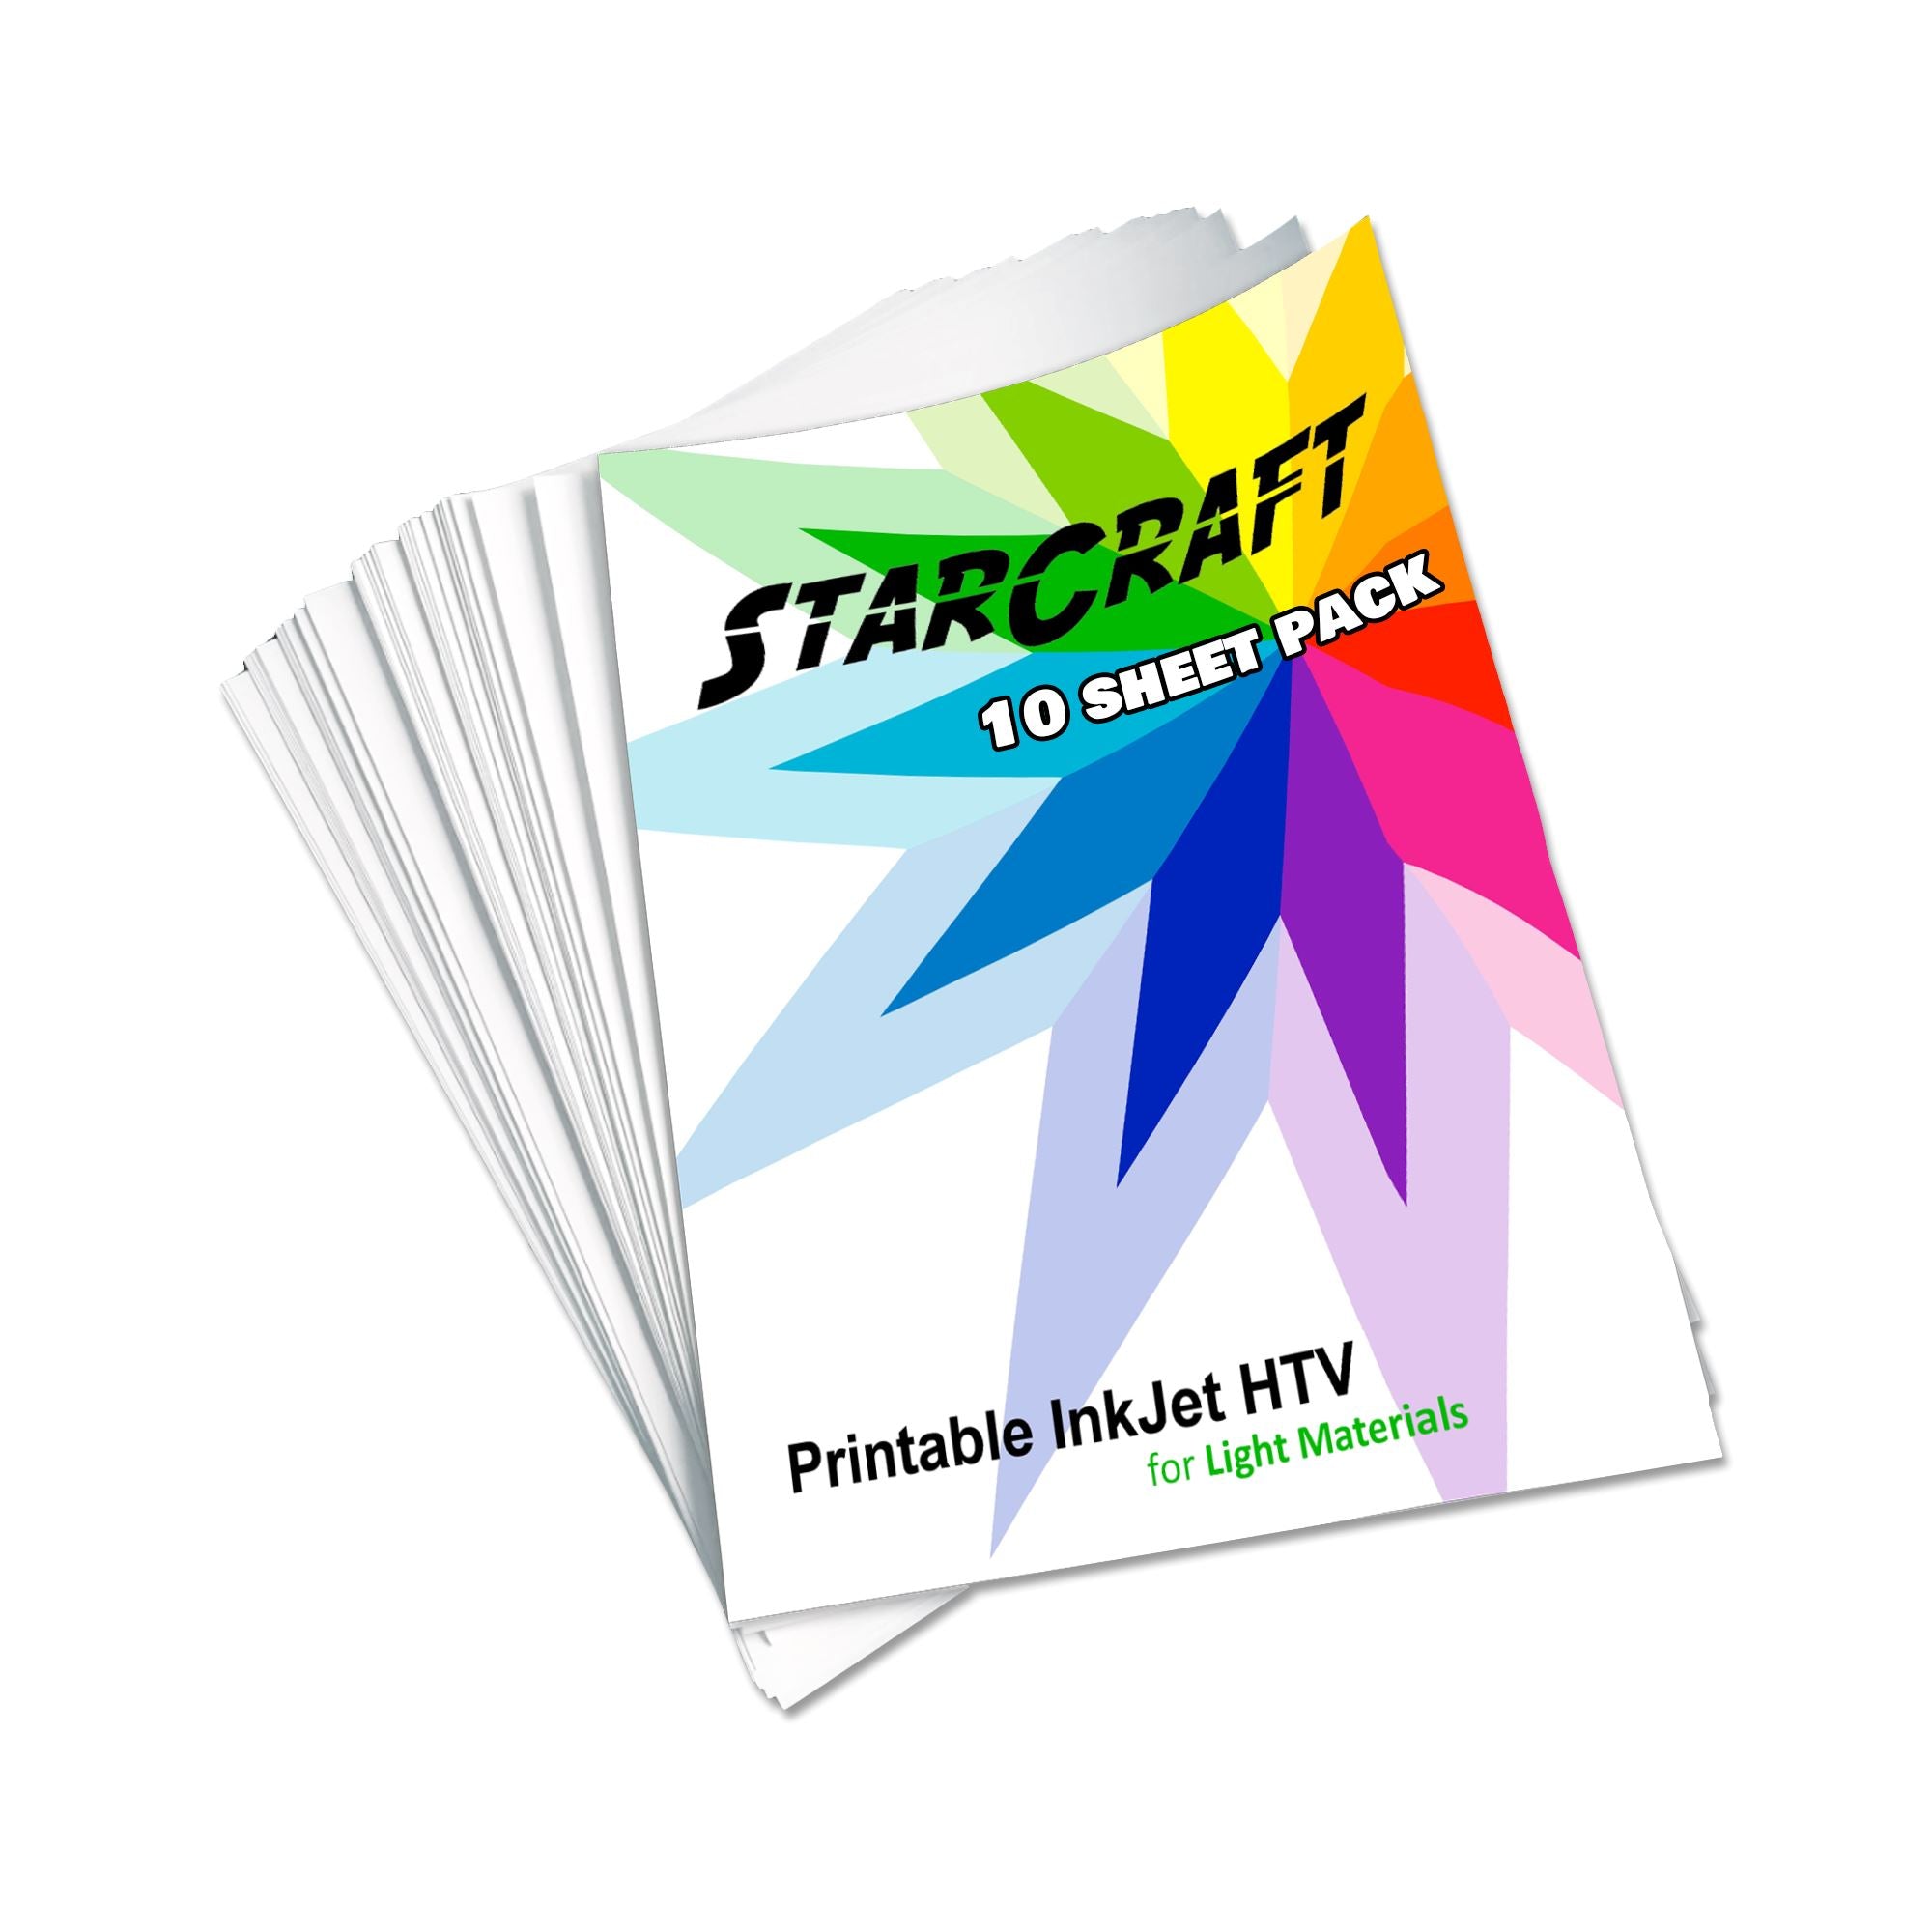 StarCraft Glossy UV Laminate 10 Sheet Pack